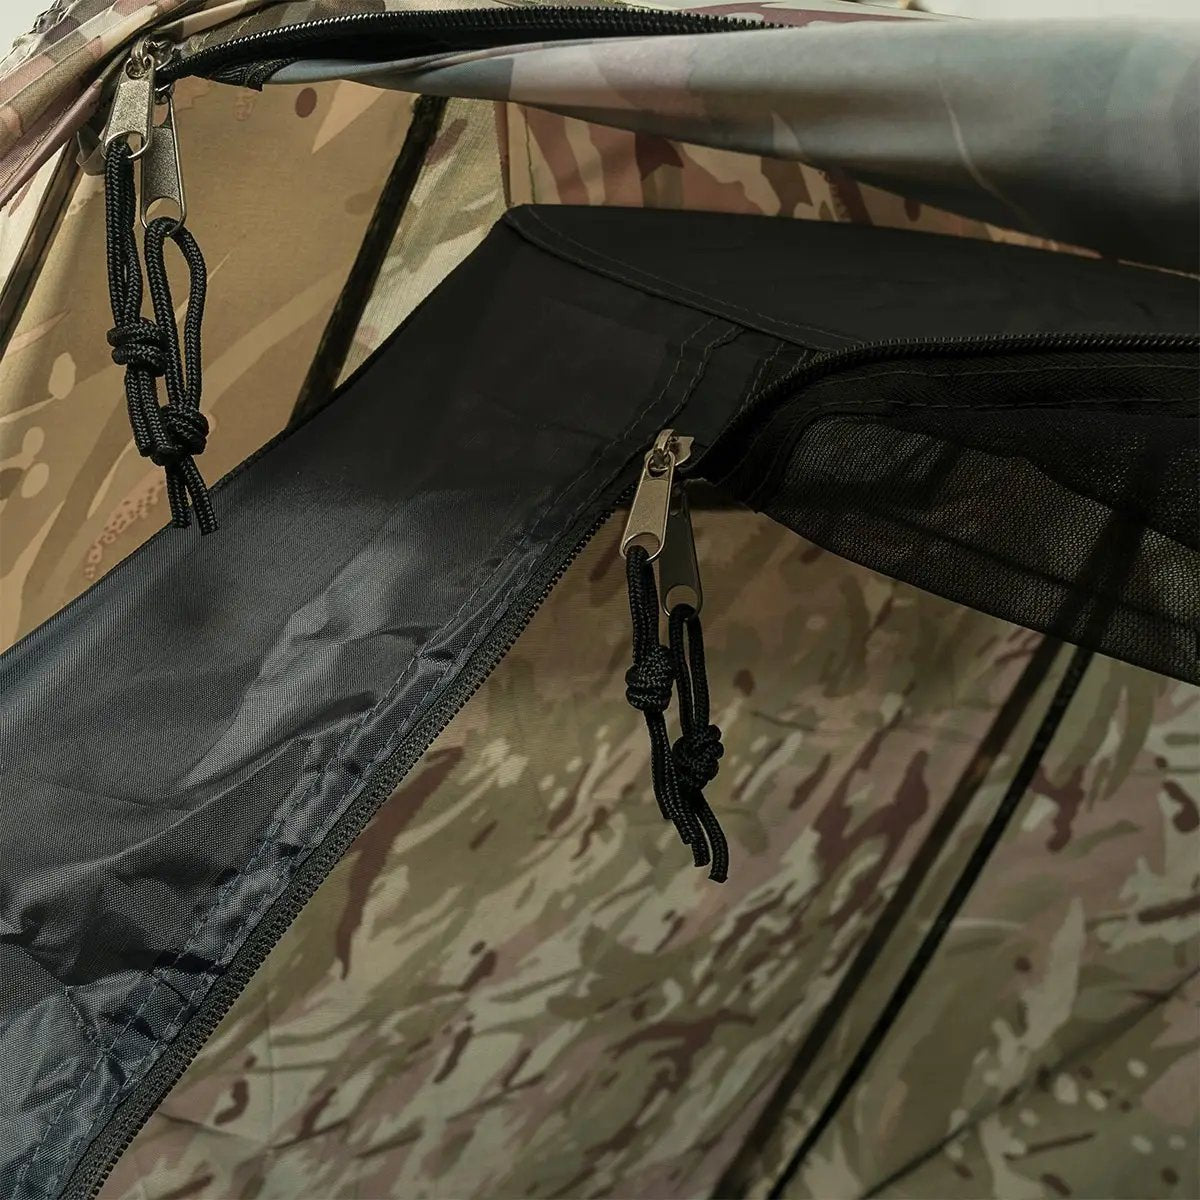 Highlander Blackthorn 1 Person Lightweight XL Tent - John Bull Clothing